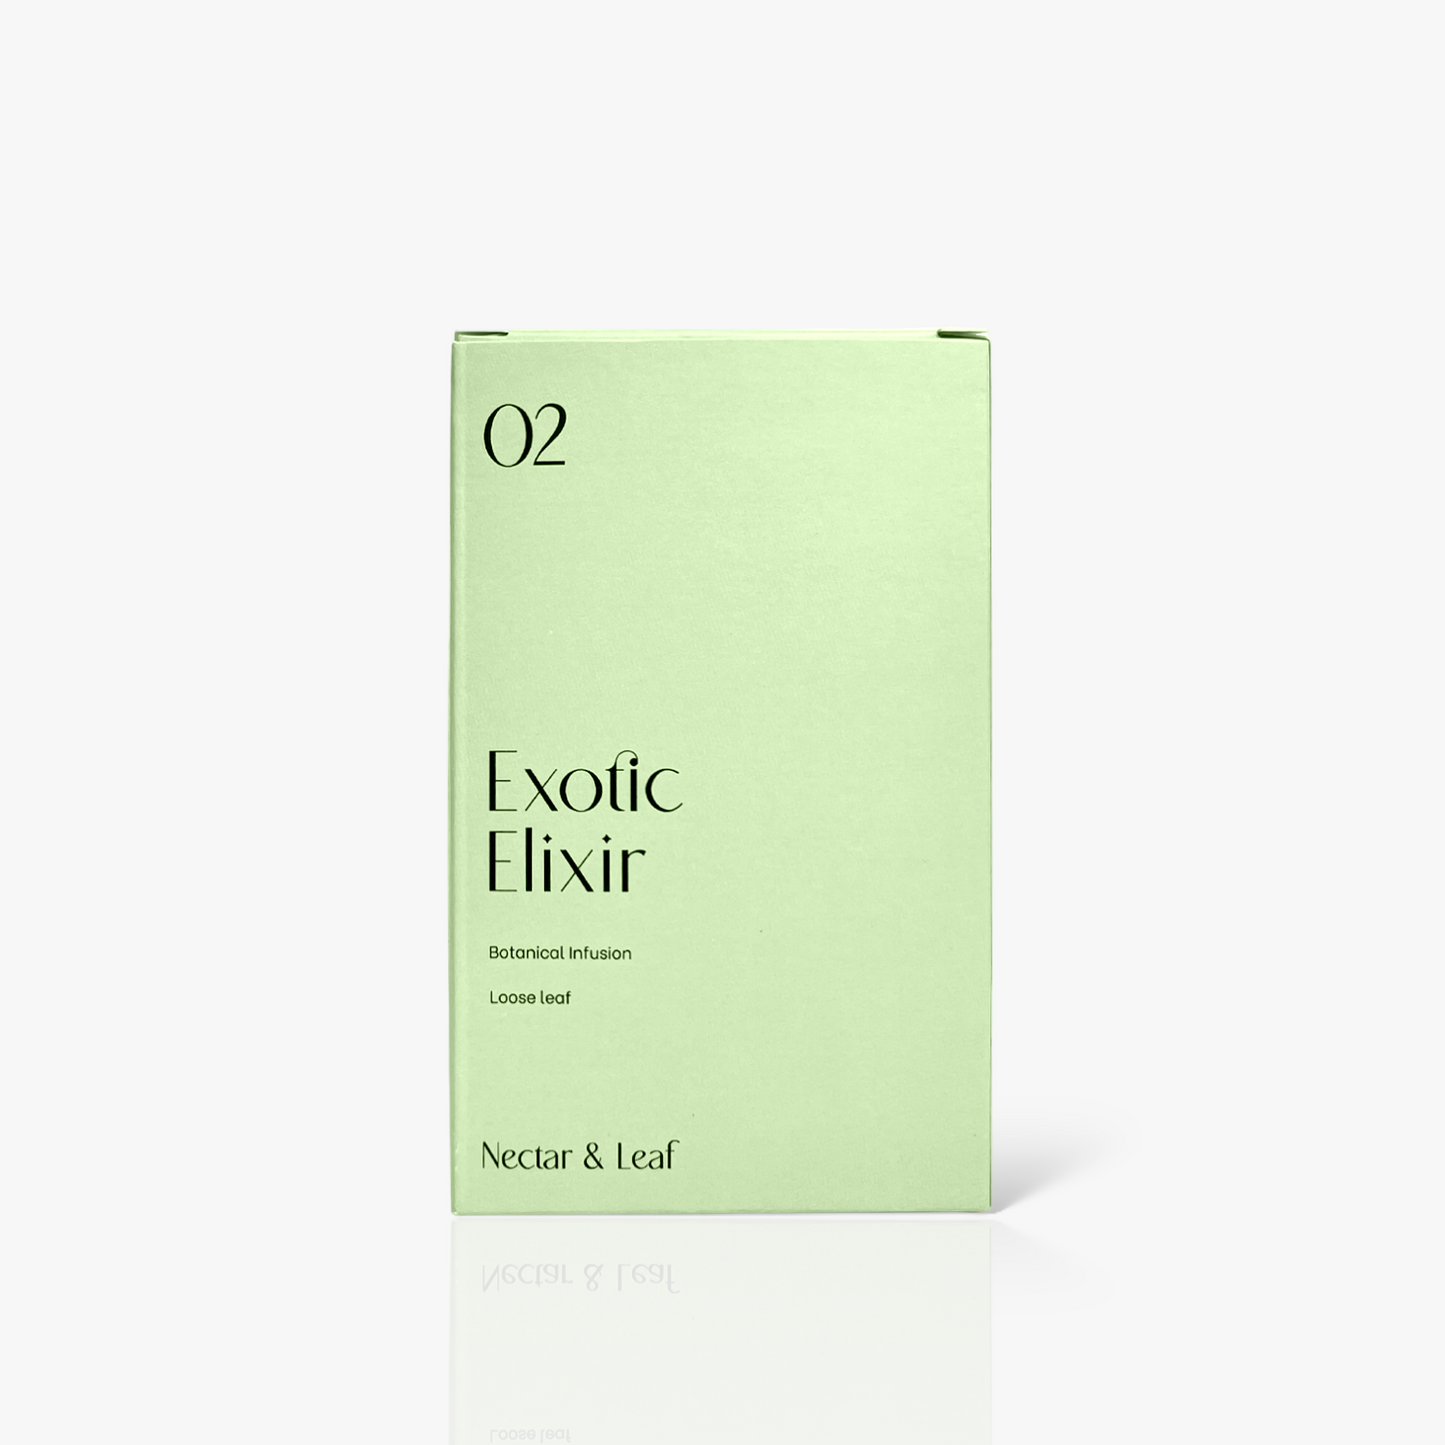 02 Exotic Elixir